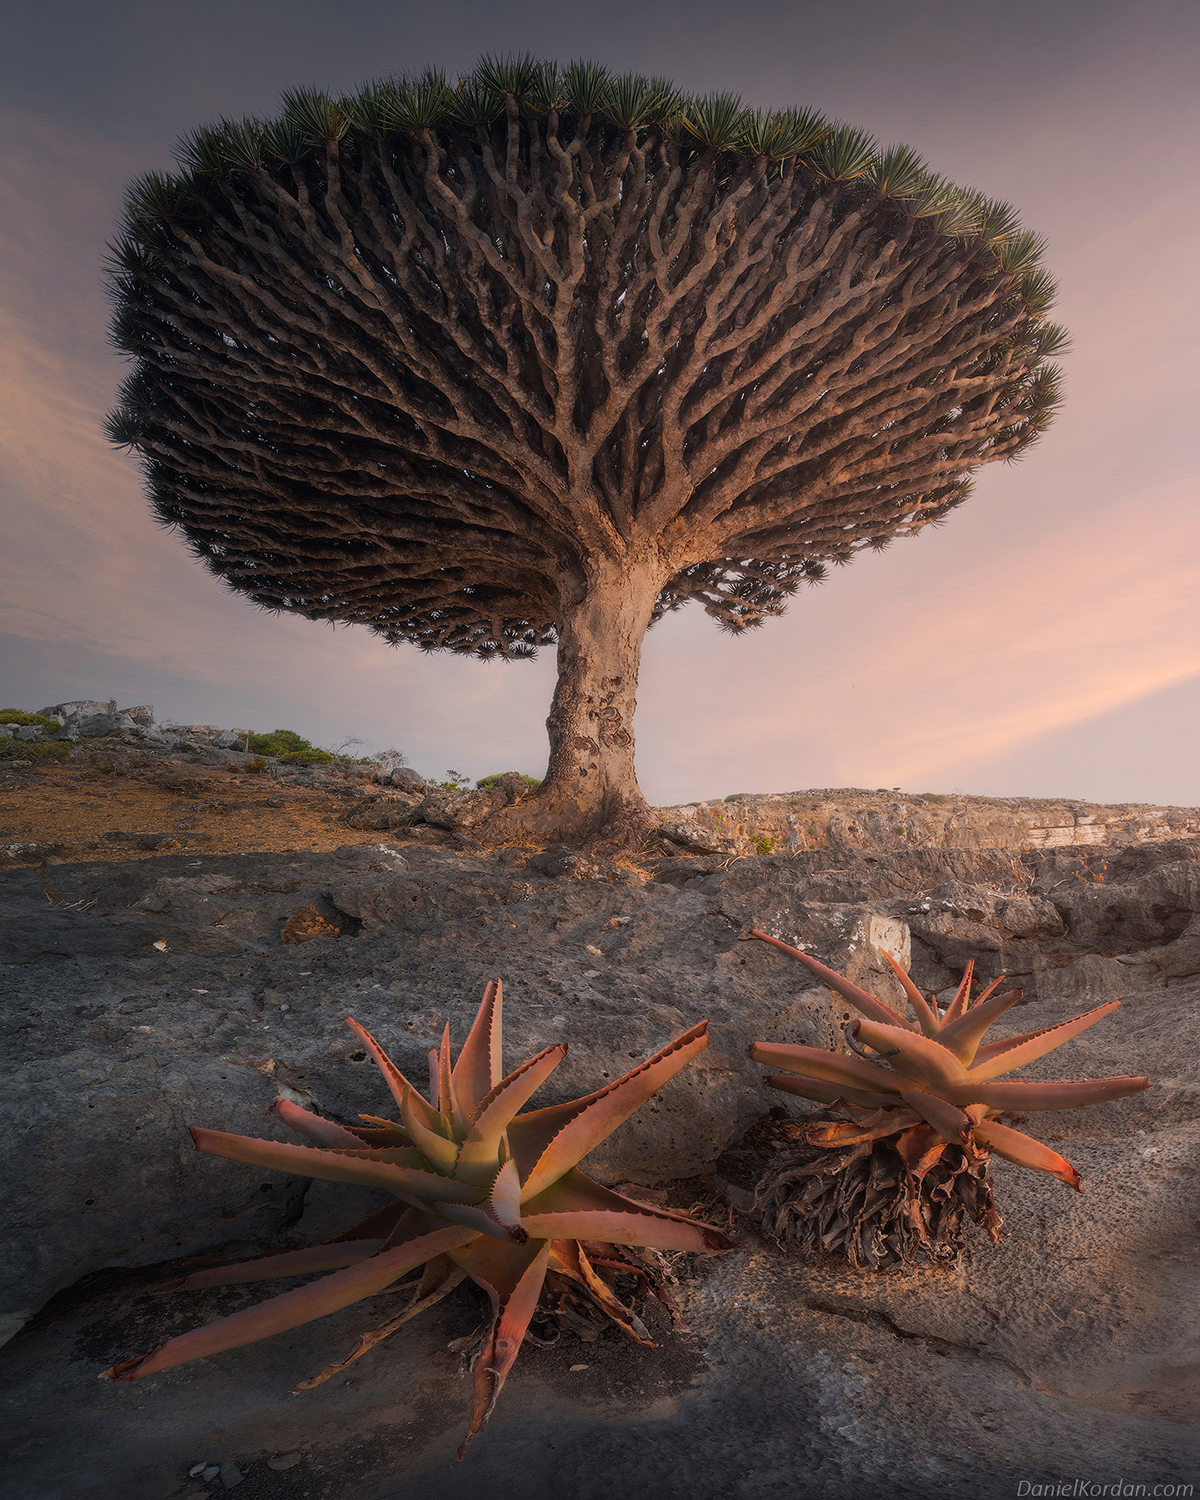 Daniel Kordan Photographs Socota's Dragon Blood Tree